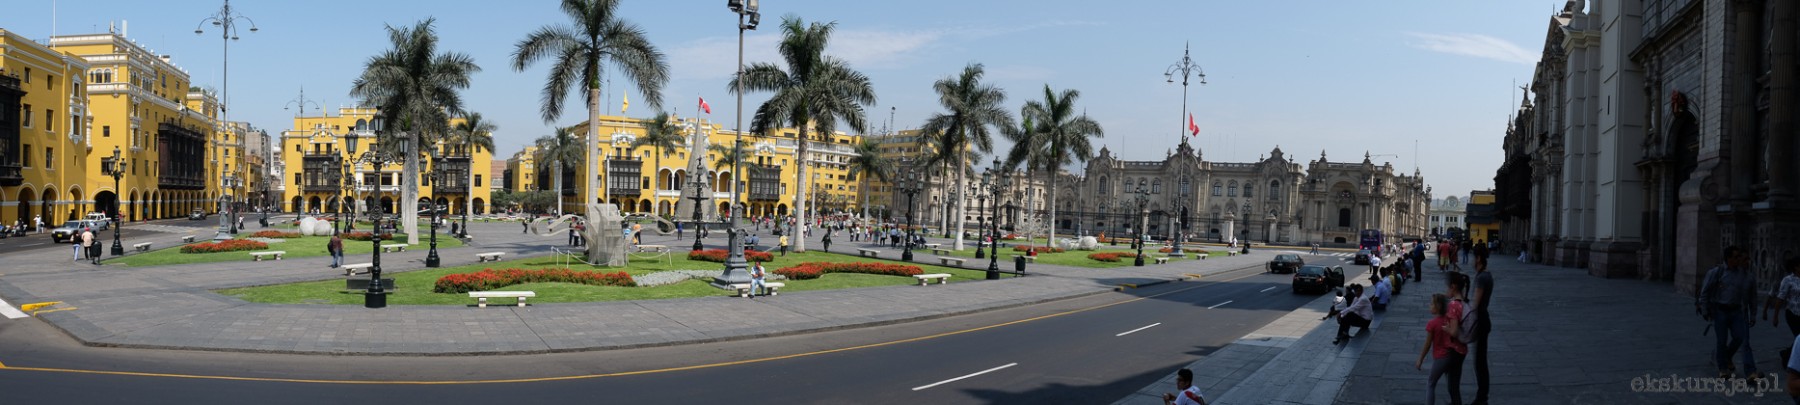 Plaza de Armas - panoramicznie